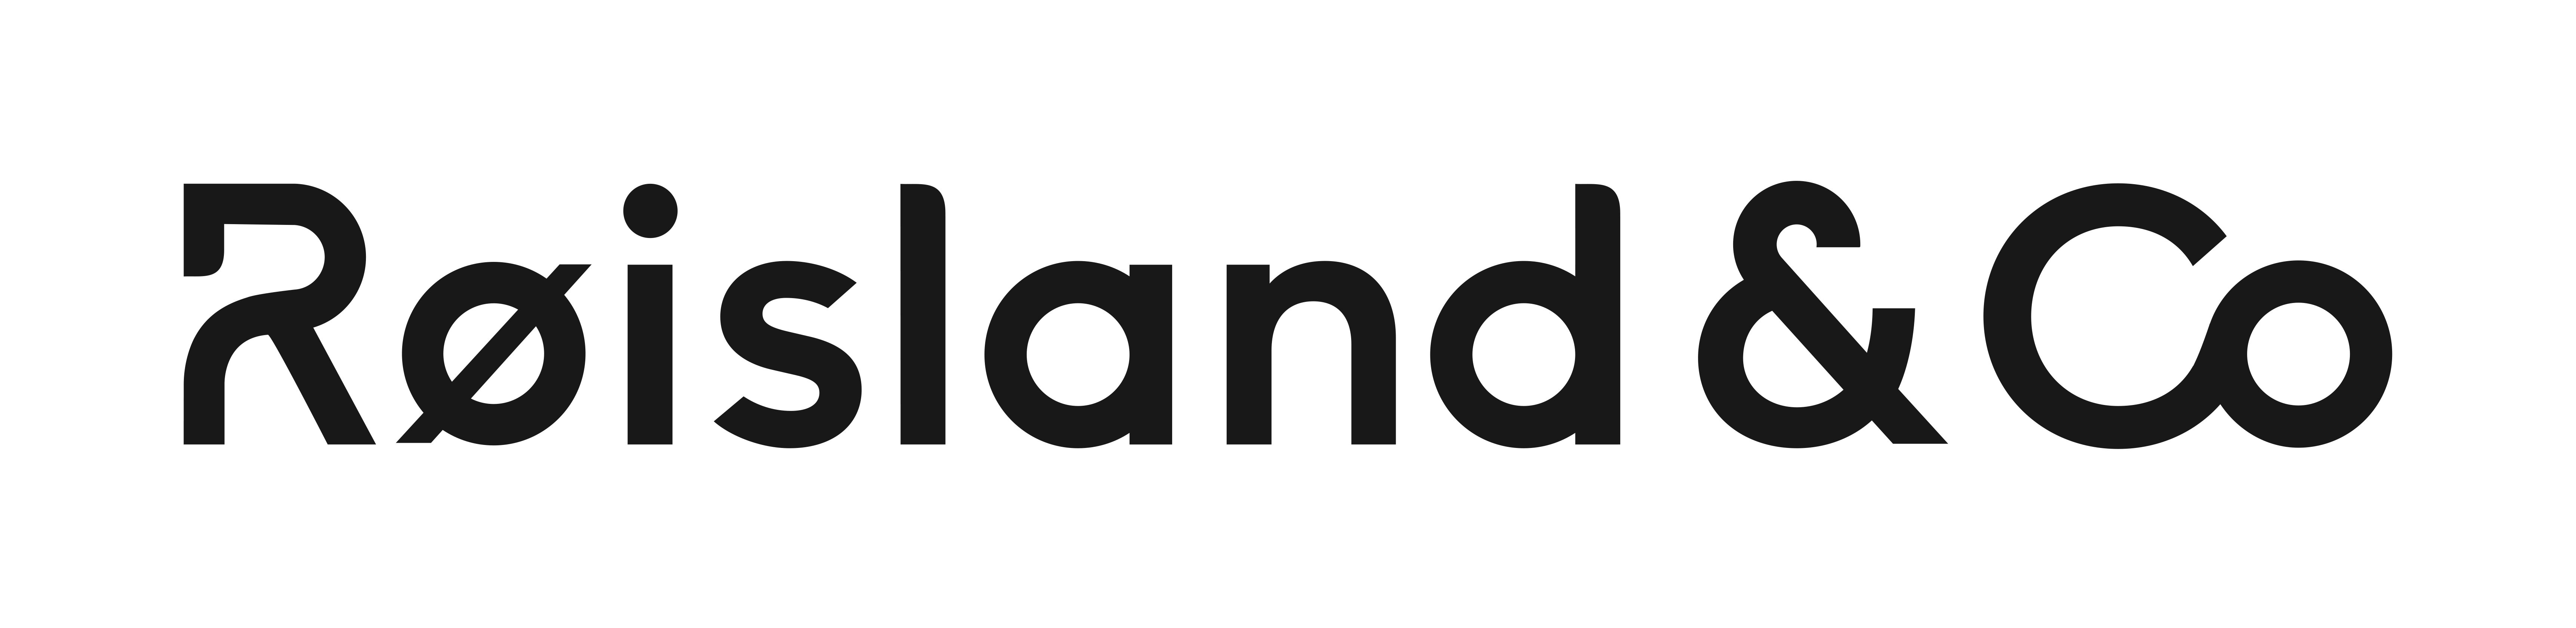 https://osu.no/uploads/roisland-logo-sort-RGB-1.png